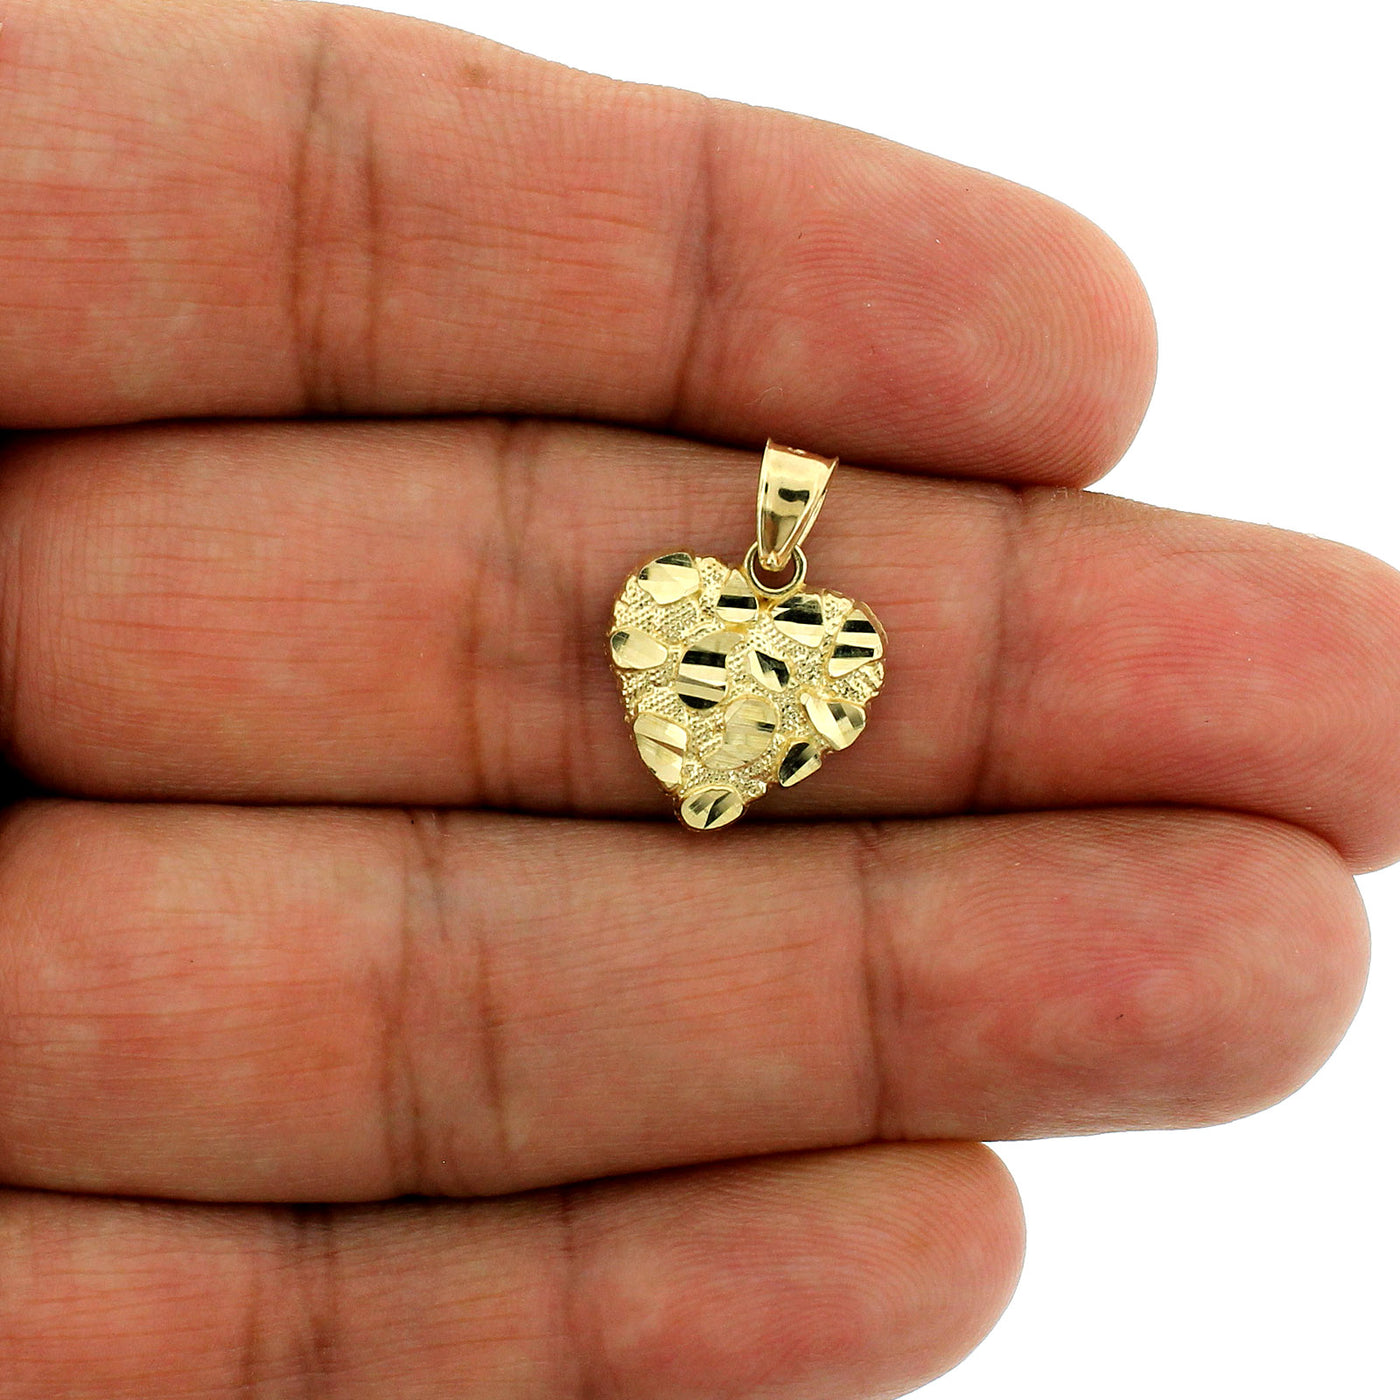 Real 10K Yellow Gold Diamond Cut Nugget Heart Pendant, Womens 10KT Gold Charm